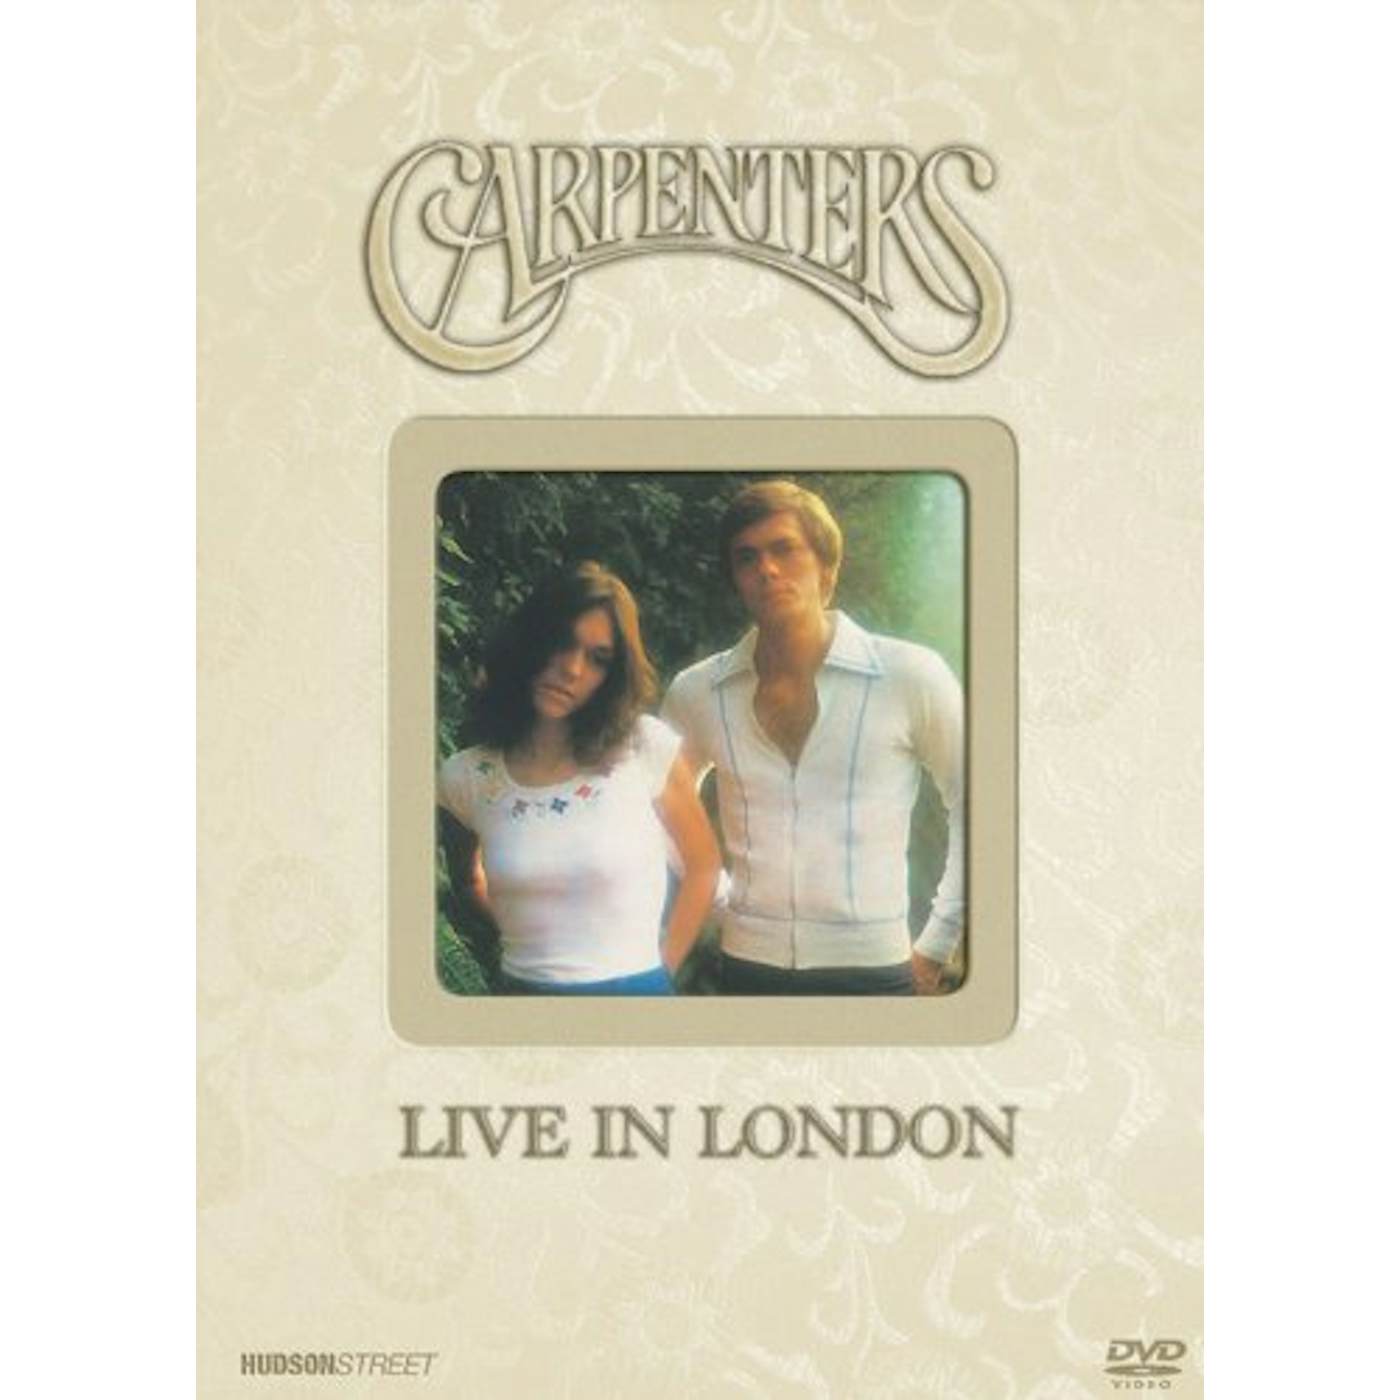 Carpenters LIVE IN LONDON DVD